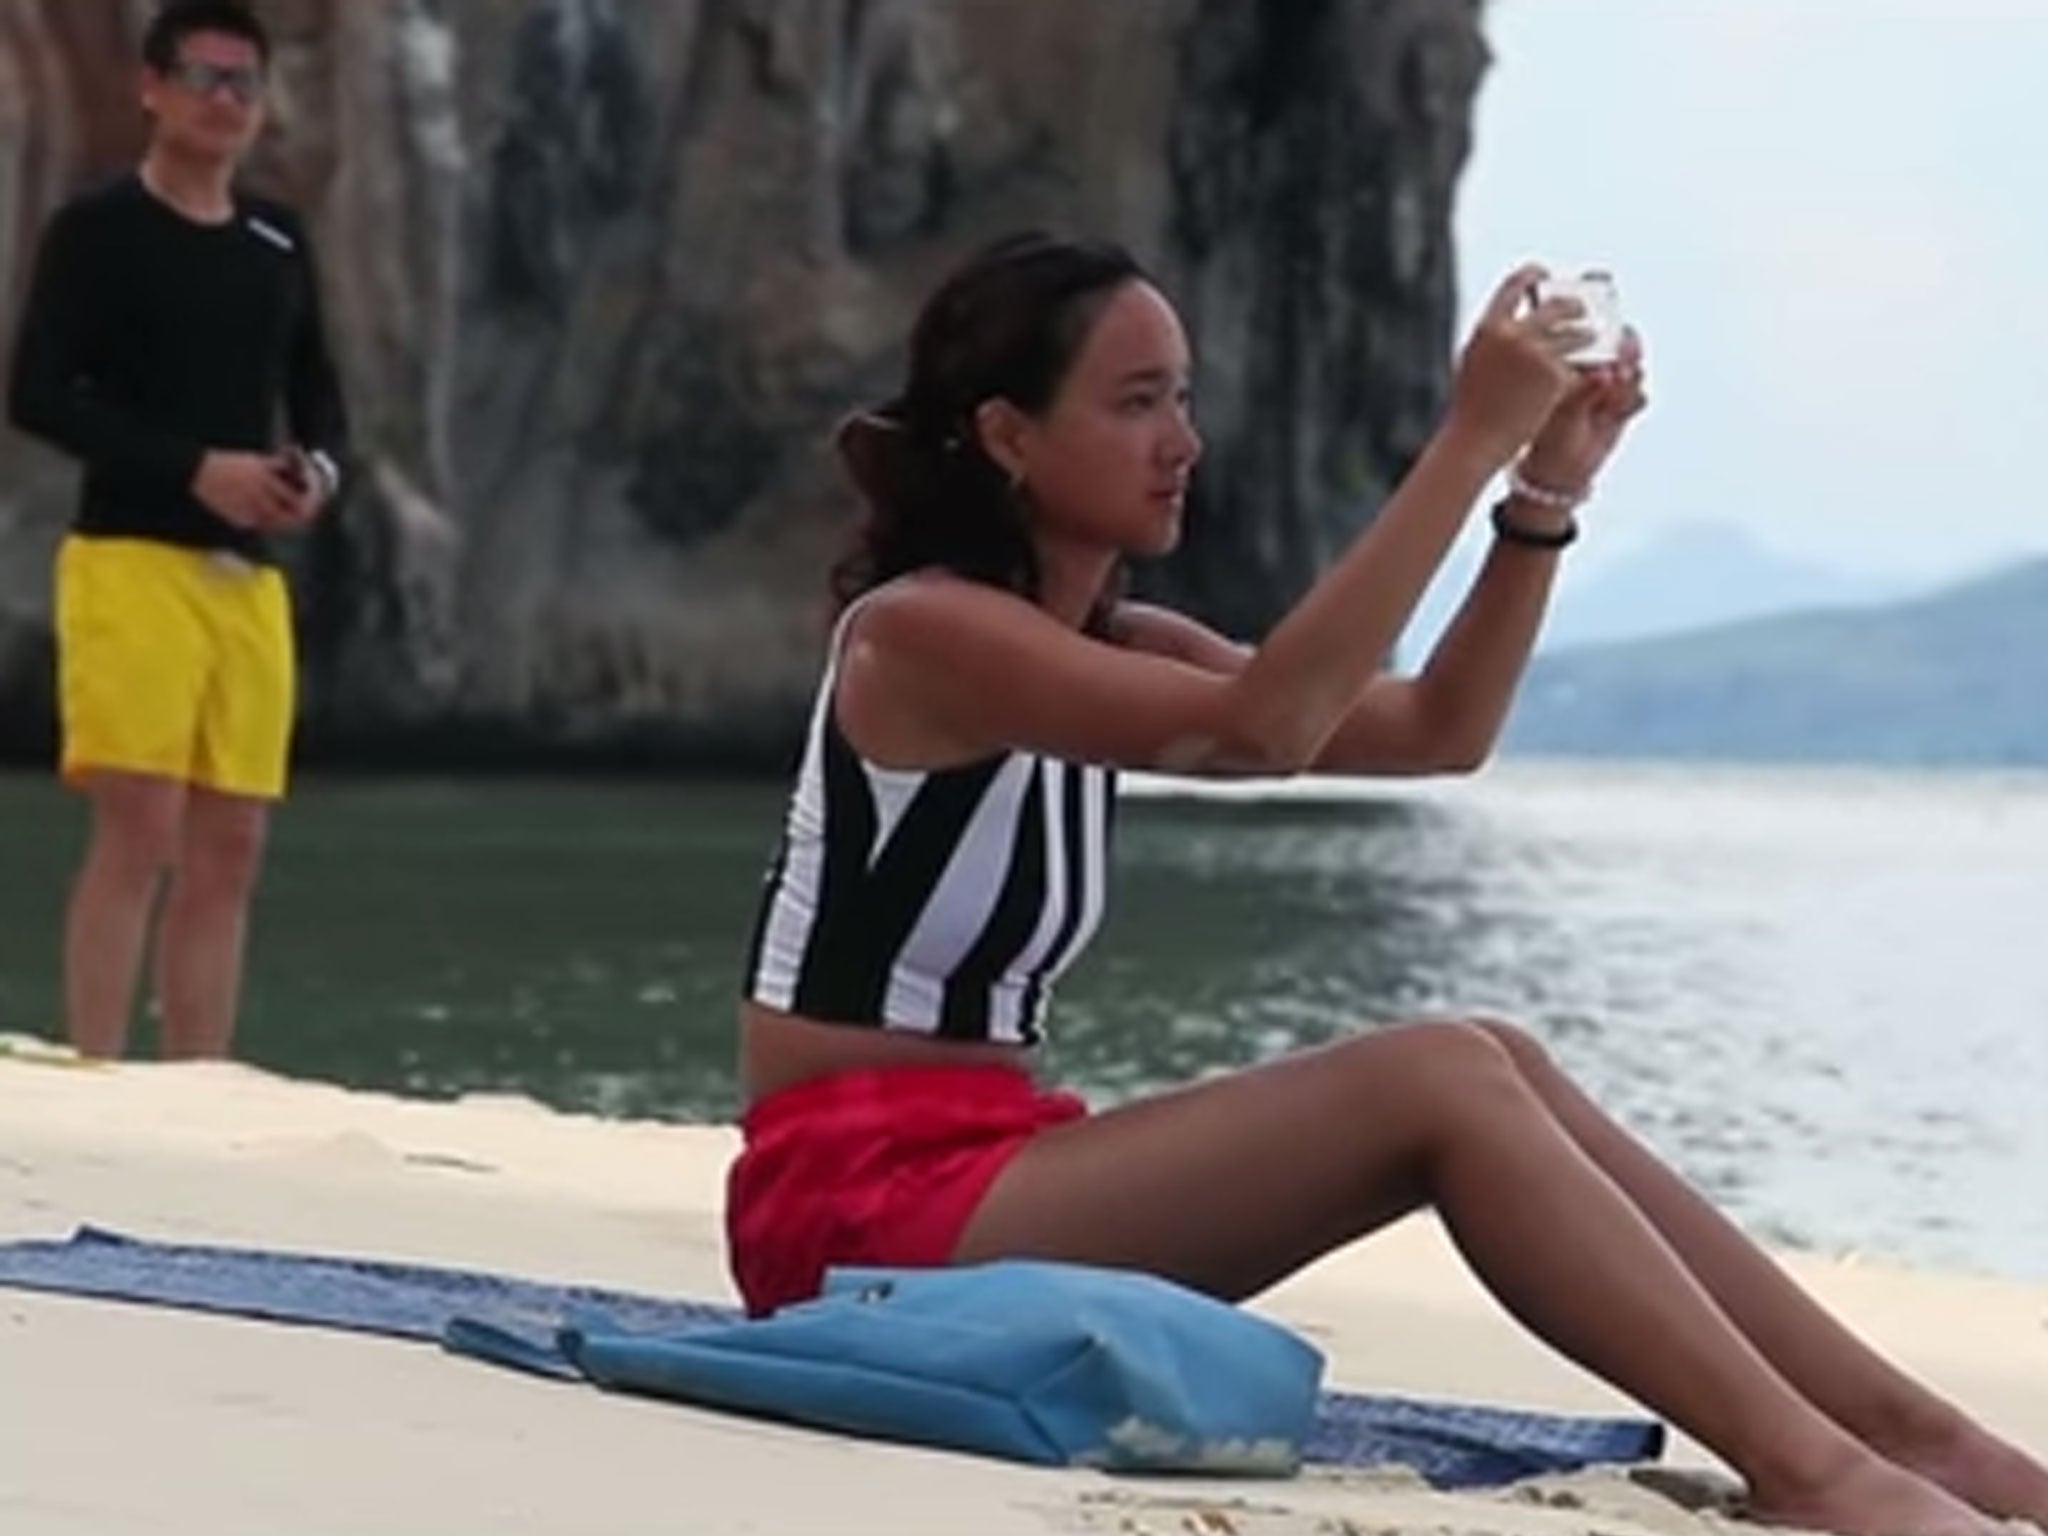 A man follows a woman onto a Thai beach without her realising